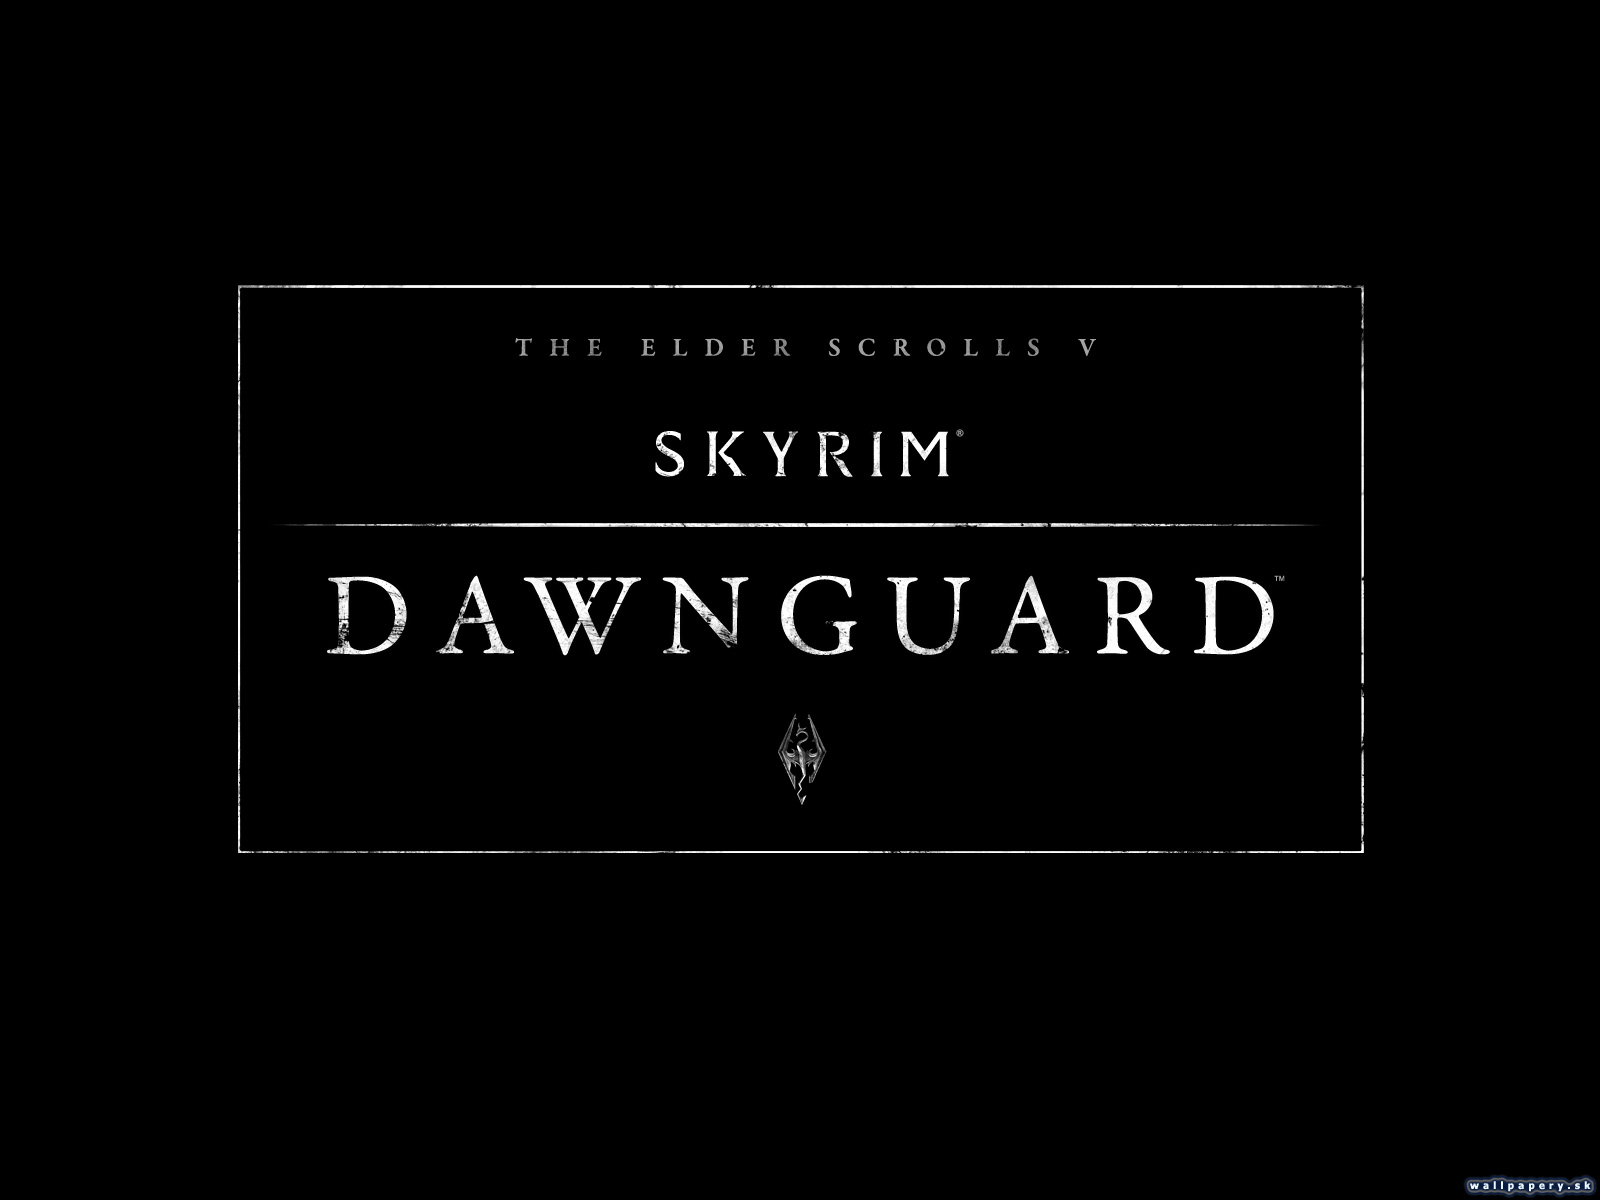 The Elder Scrolls V: Skyrim - Dawnguard - wallpaper 2